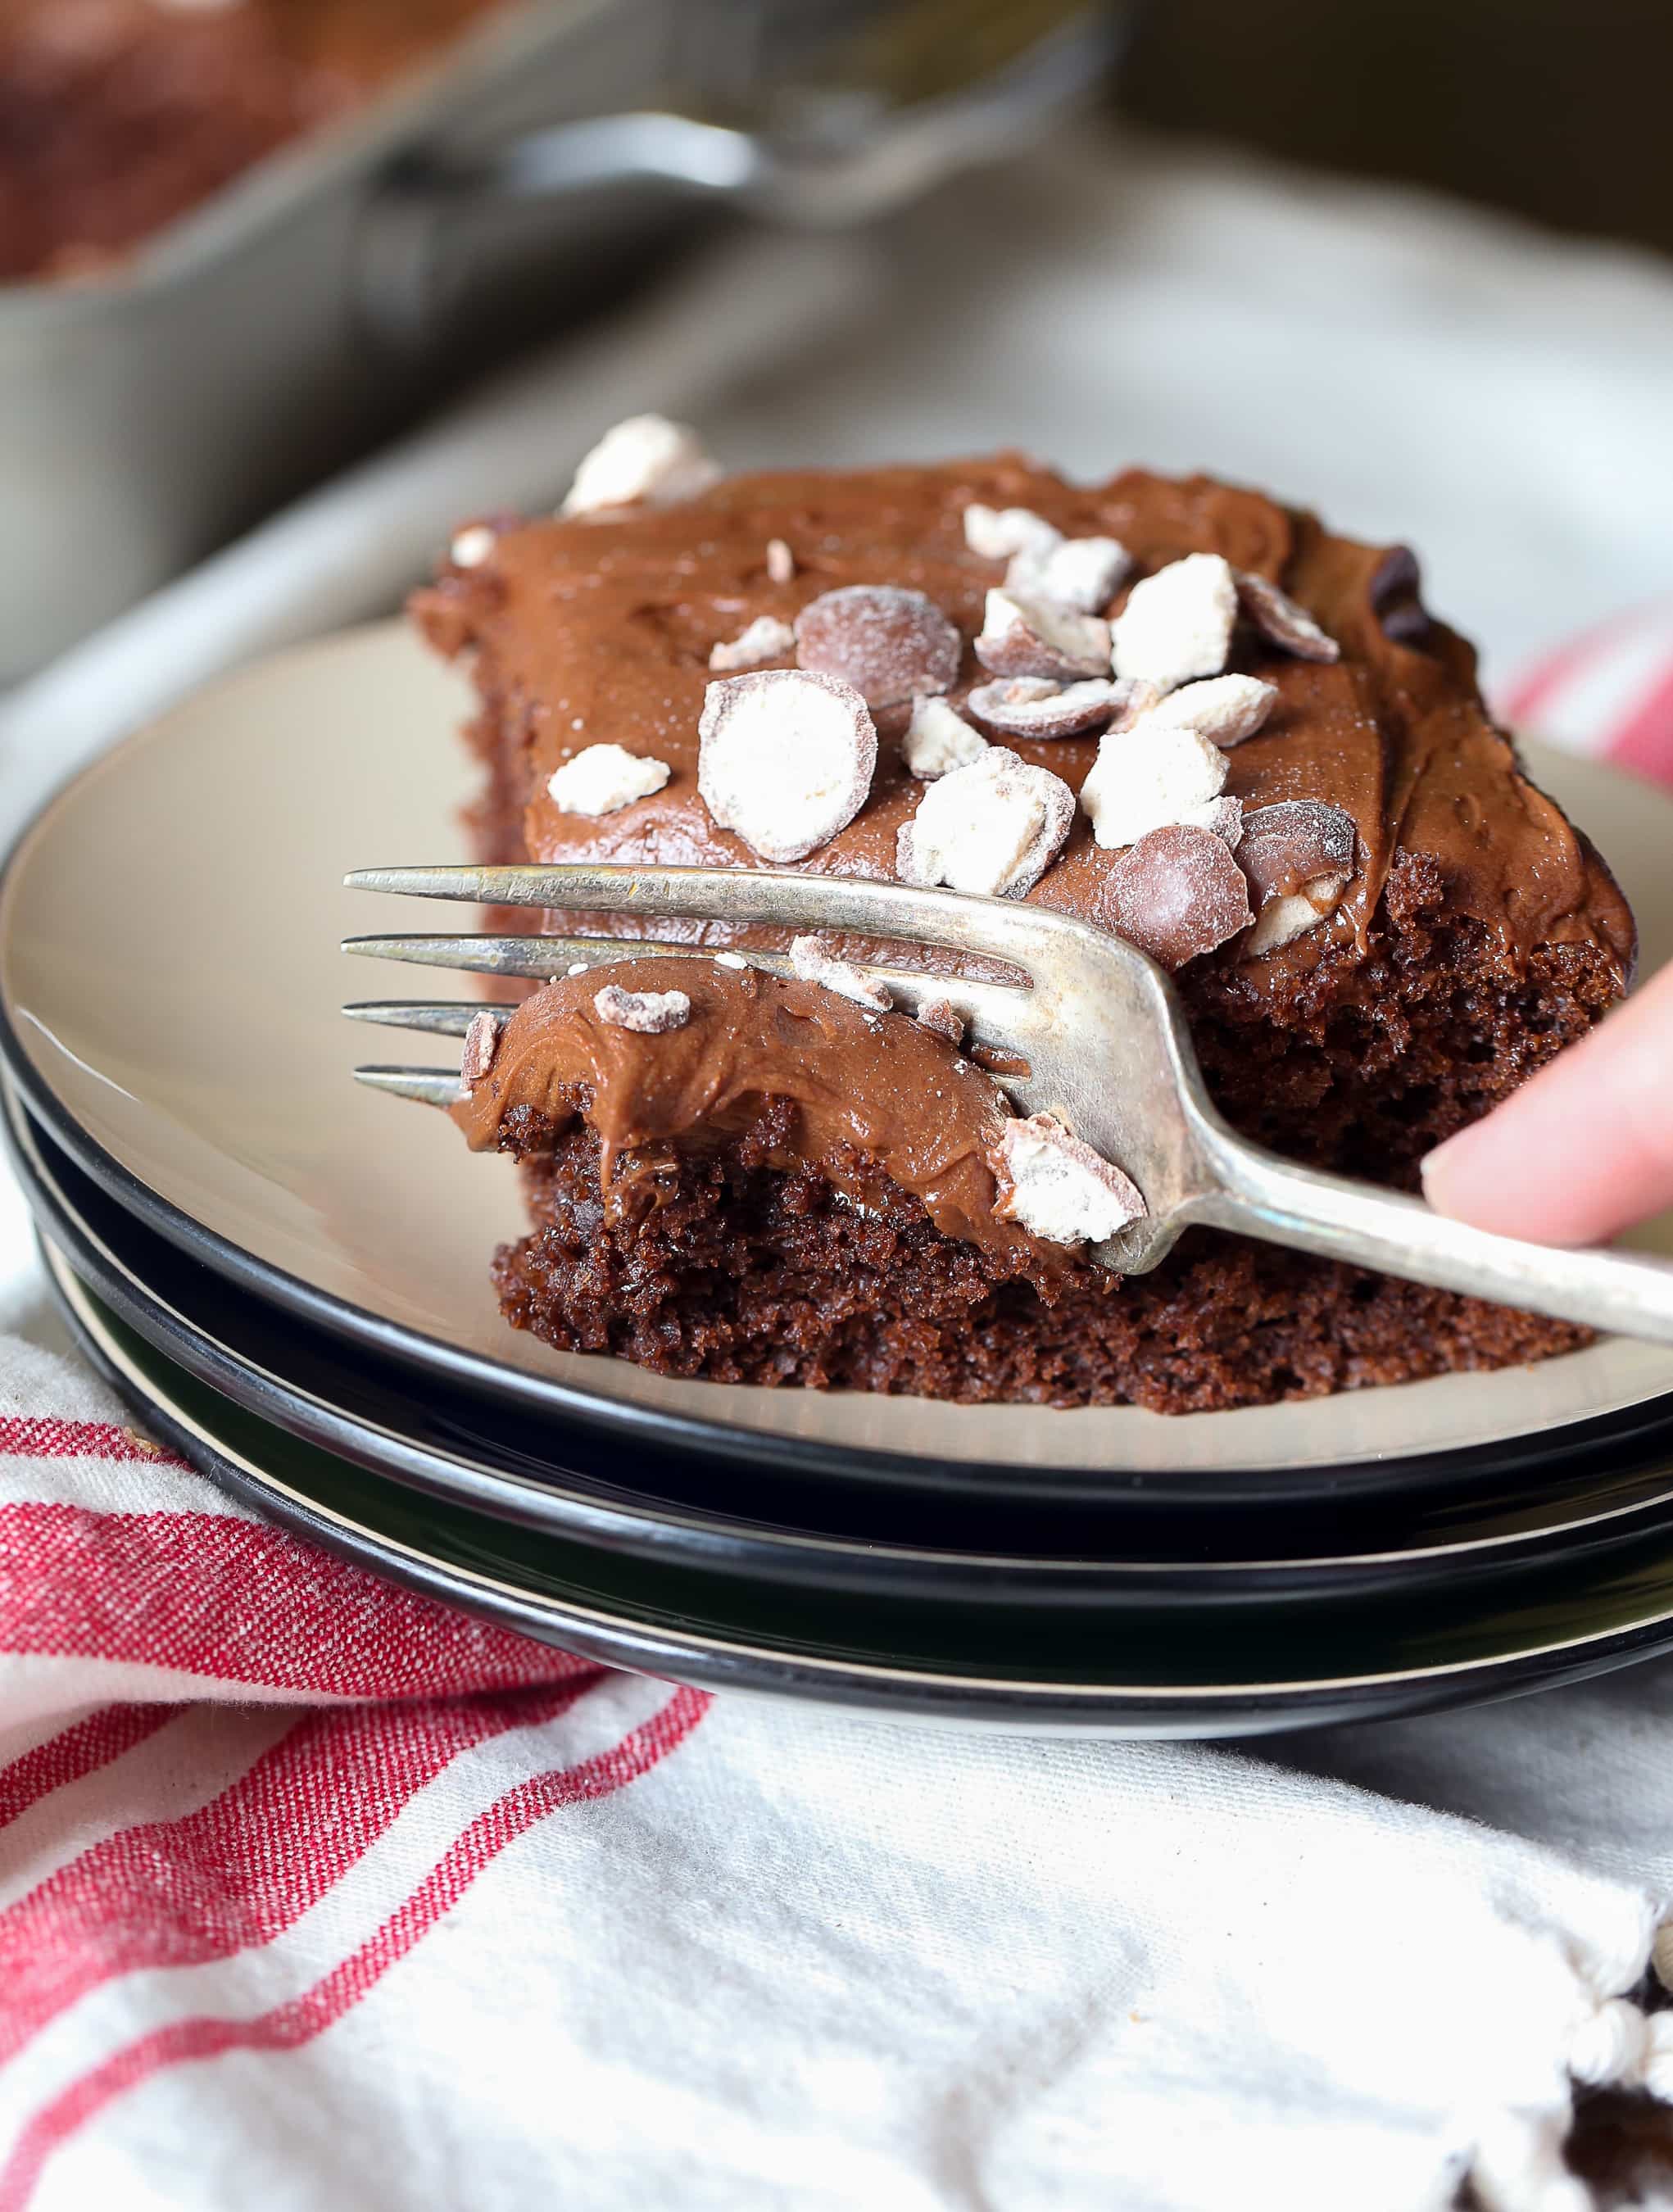 That's Life Enjoy It: What to Eat Wednesday- Chocolate Malt Cake